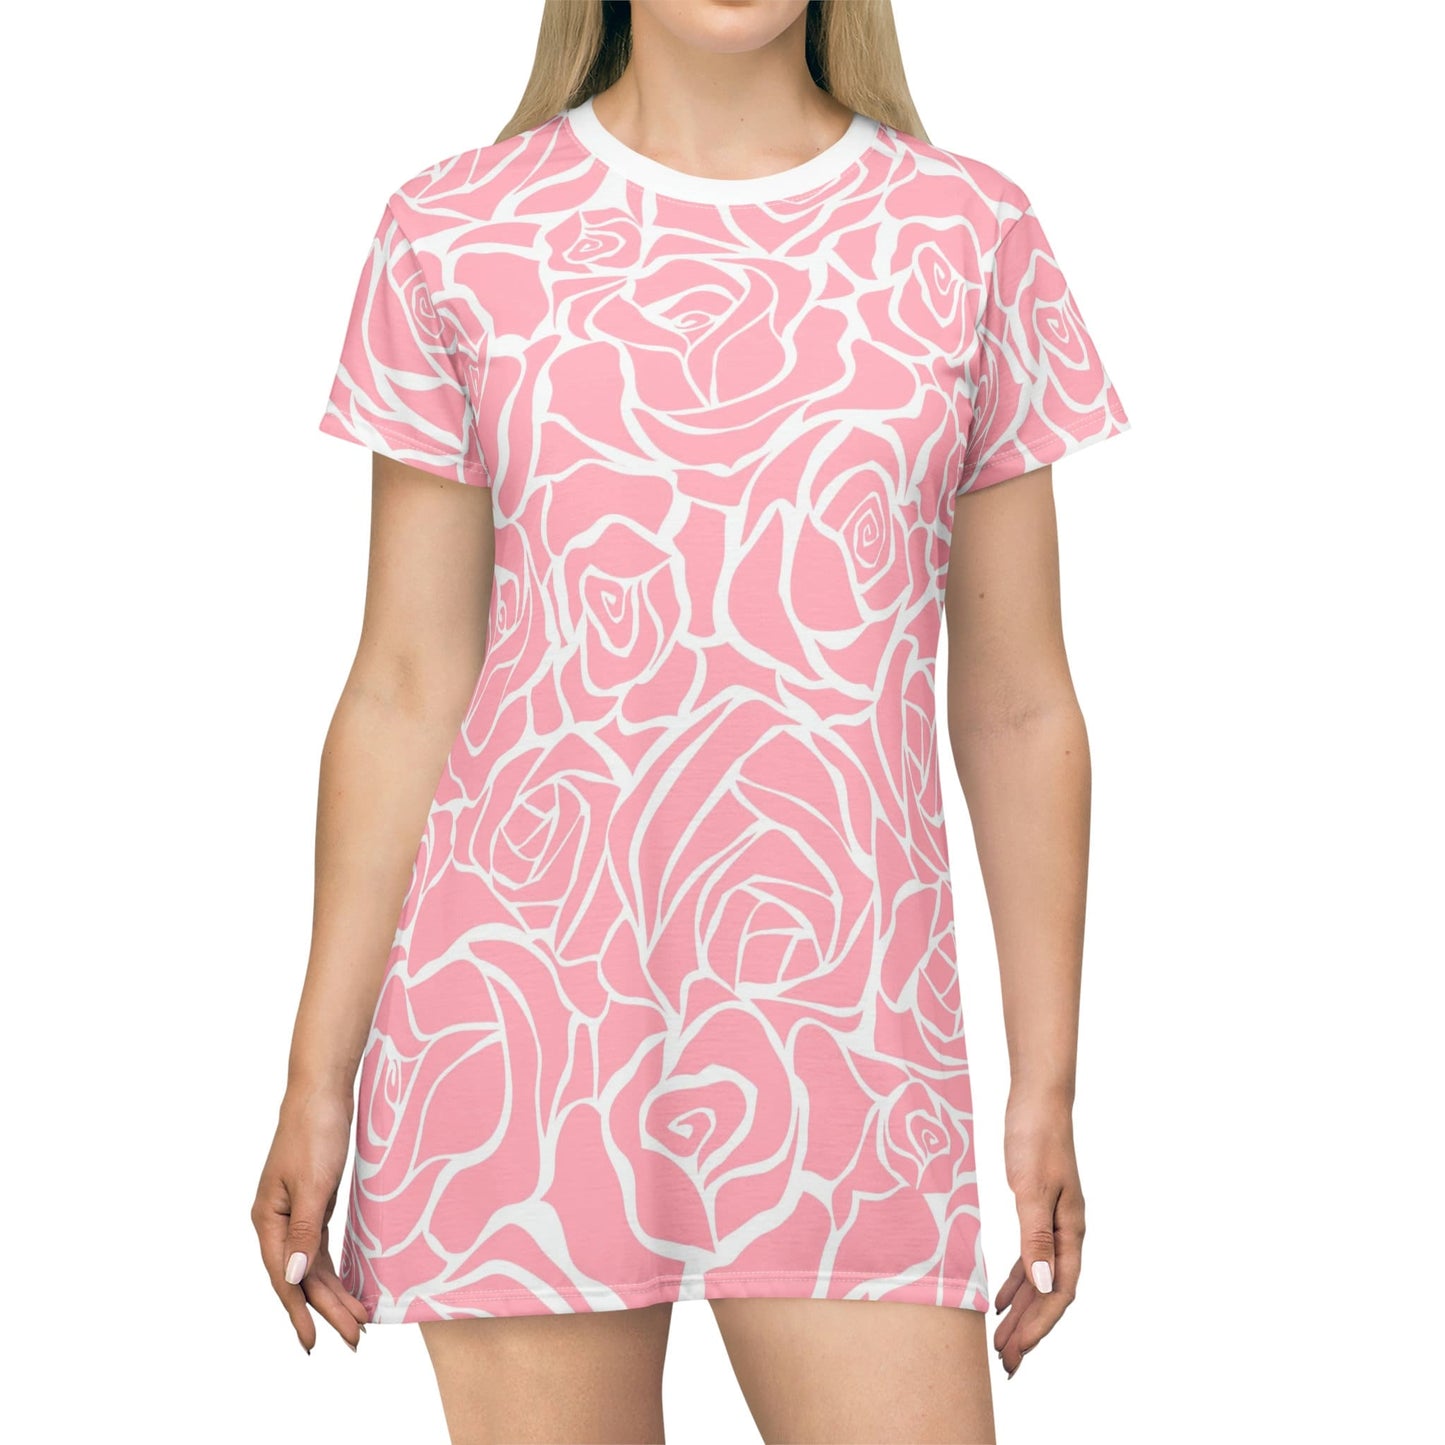 T-Shirt Dress - Pink Roses